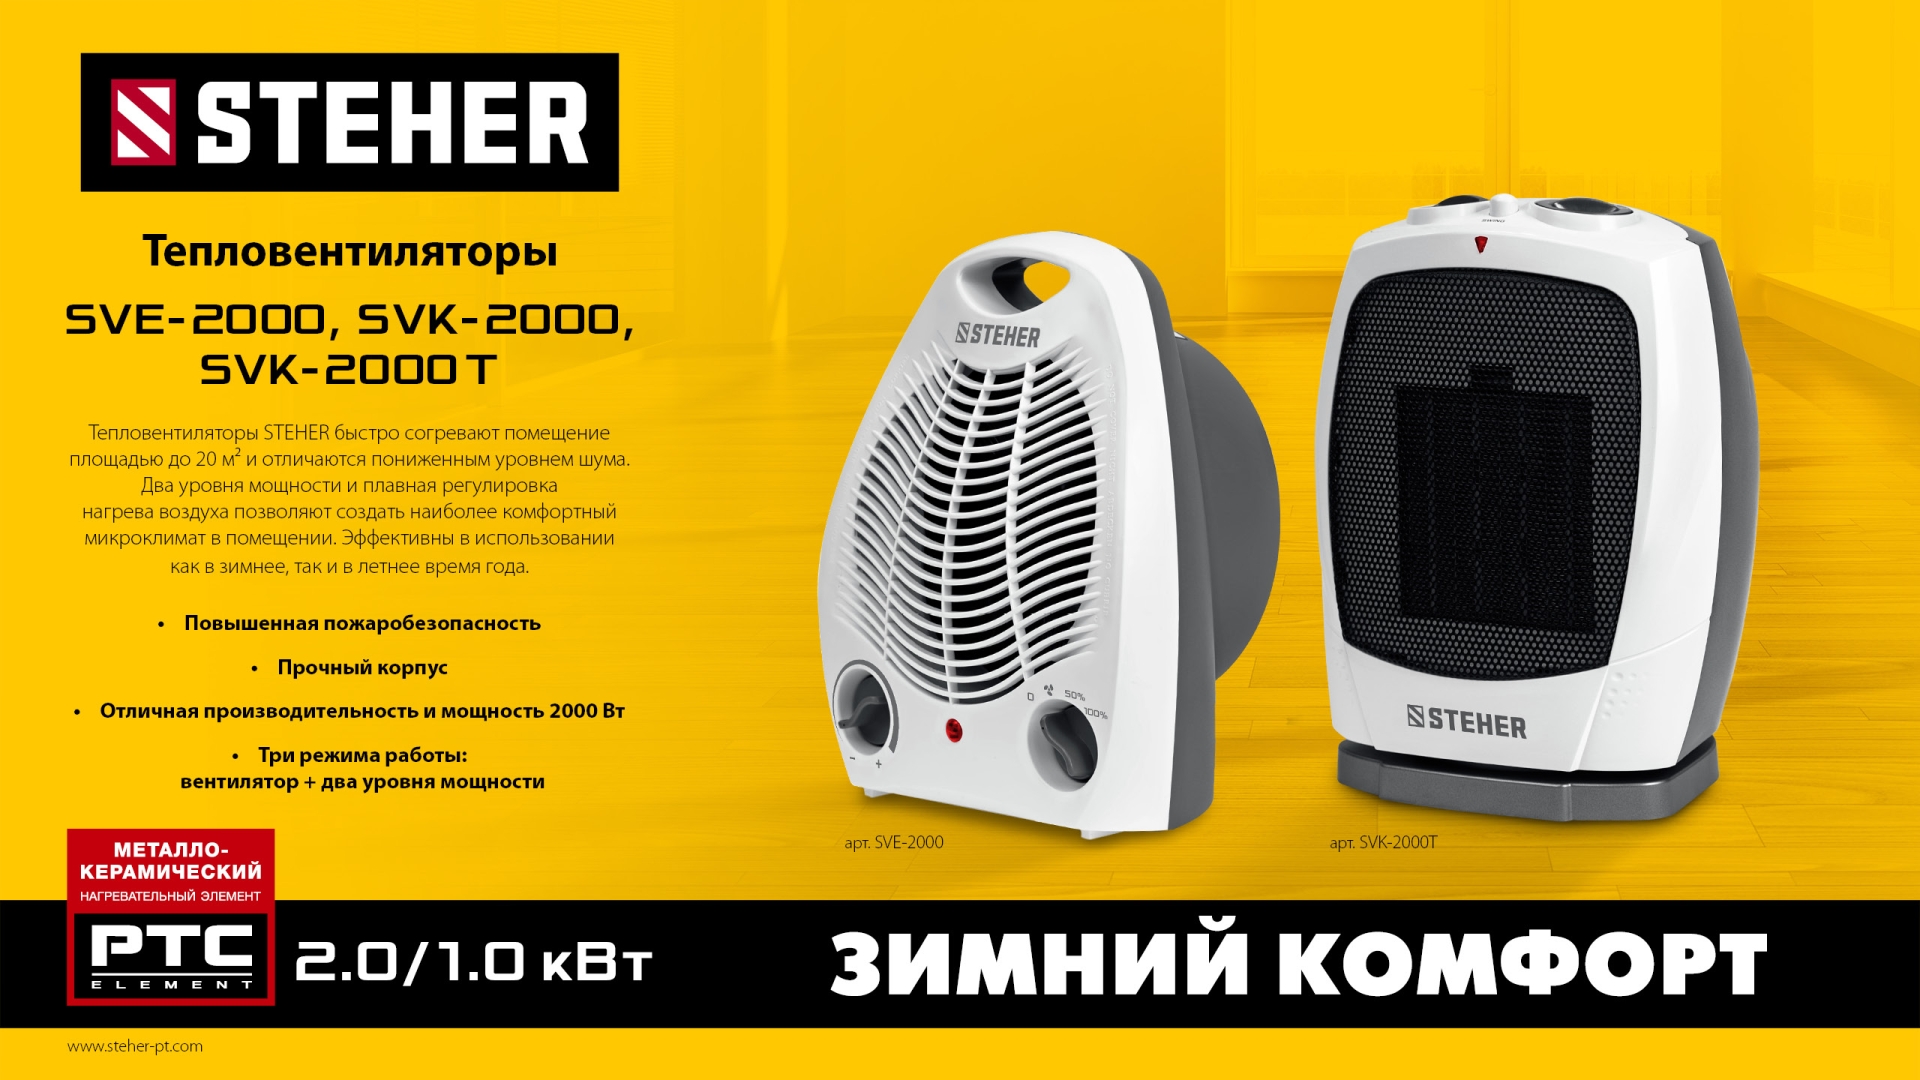 STEHER 2 кВт, тепловентилятор (SVE-2000)